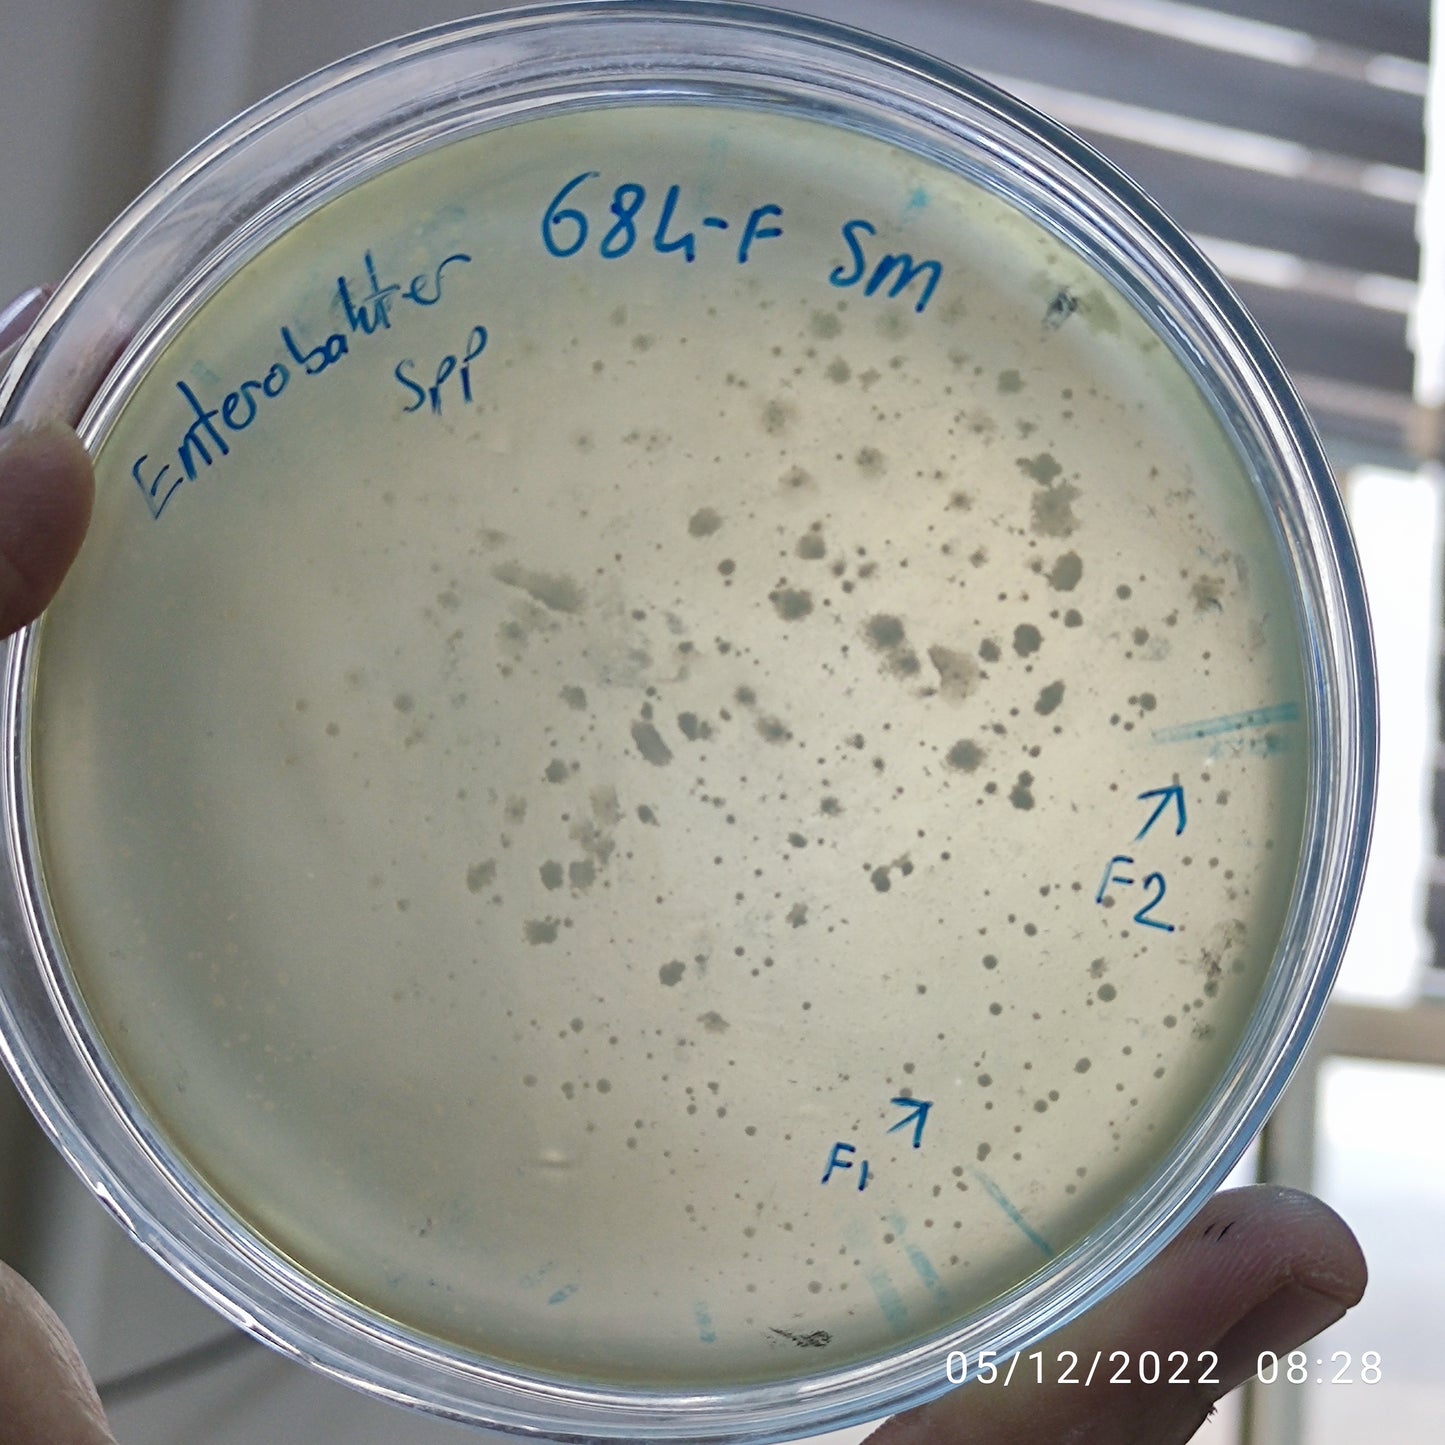 Enterobacter bacteriophage 200684F